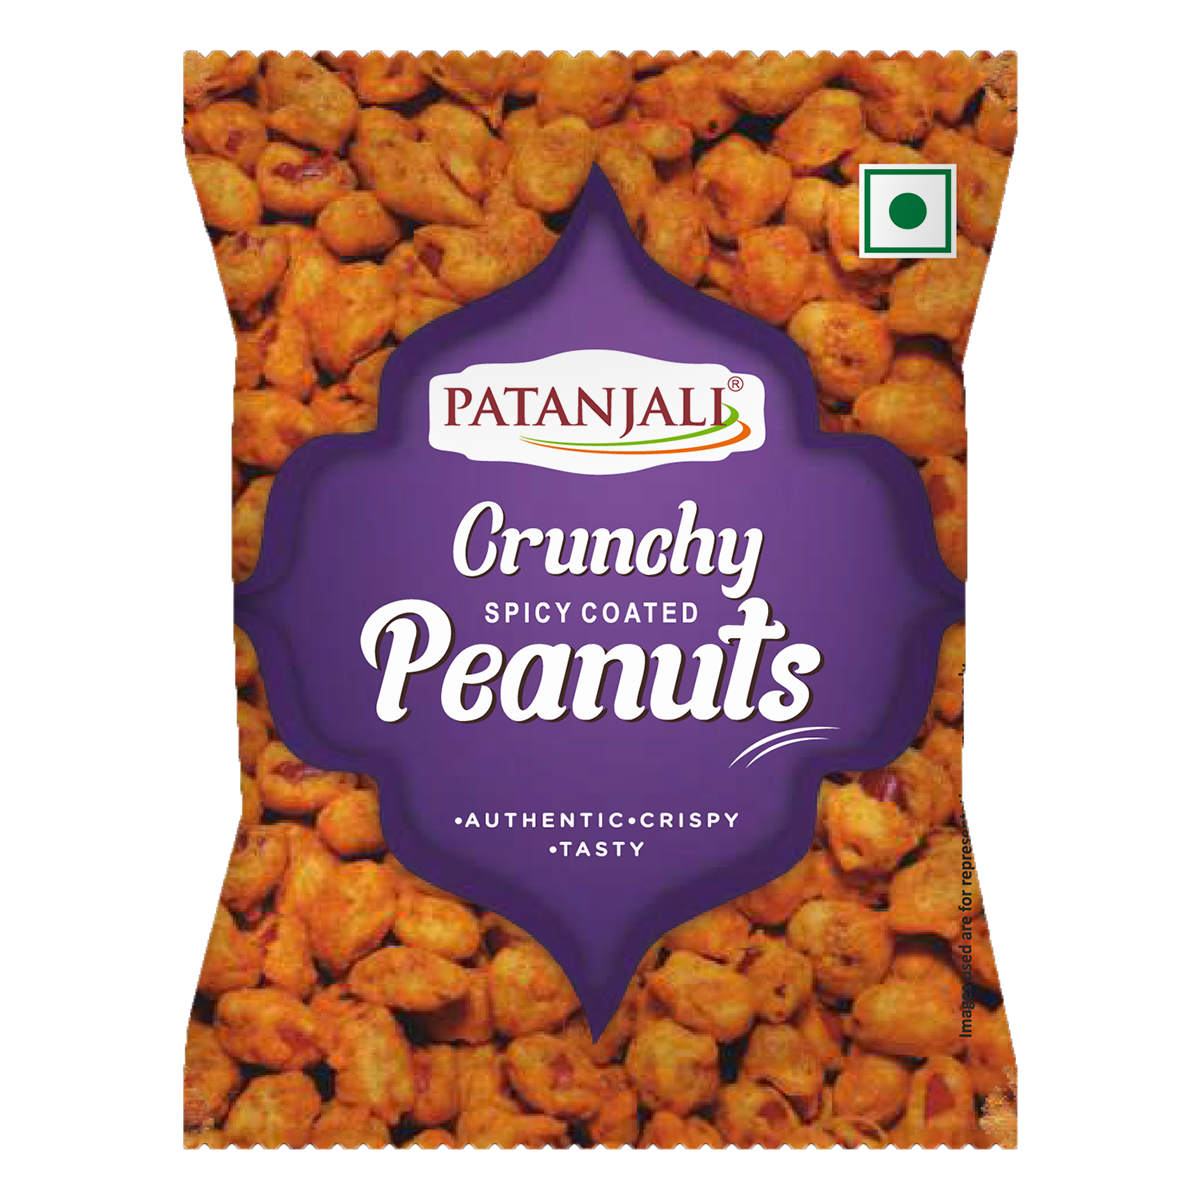 Namkeen Peanut (Crunchy)